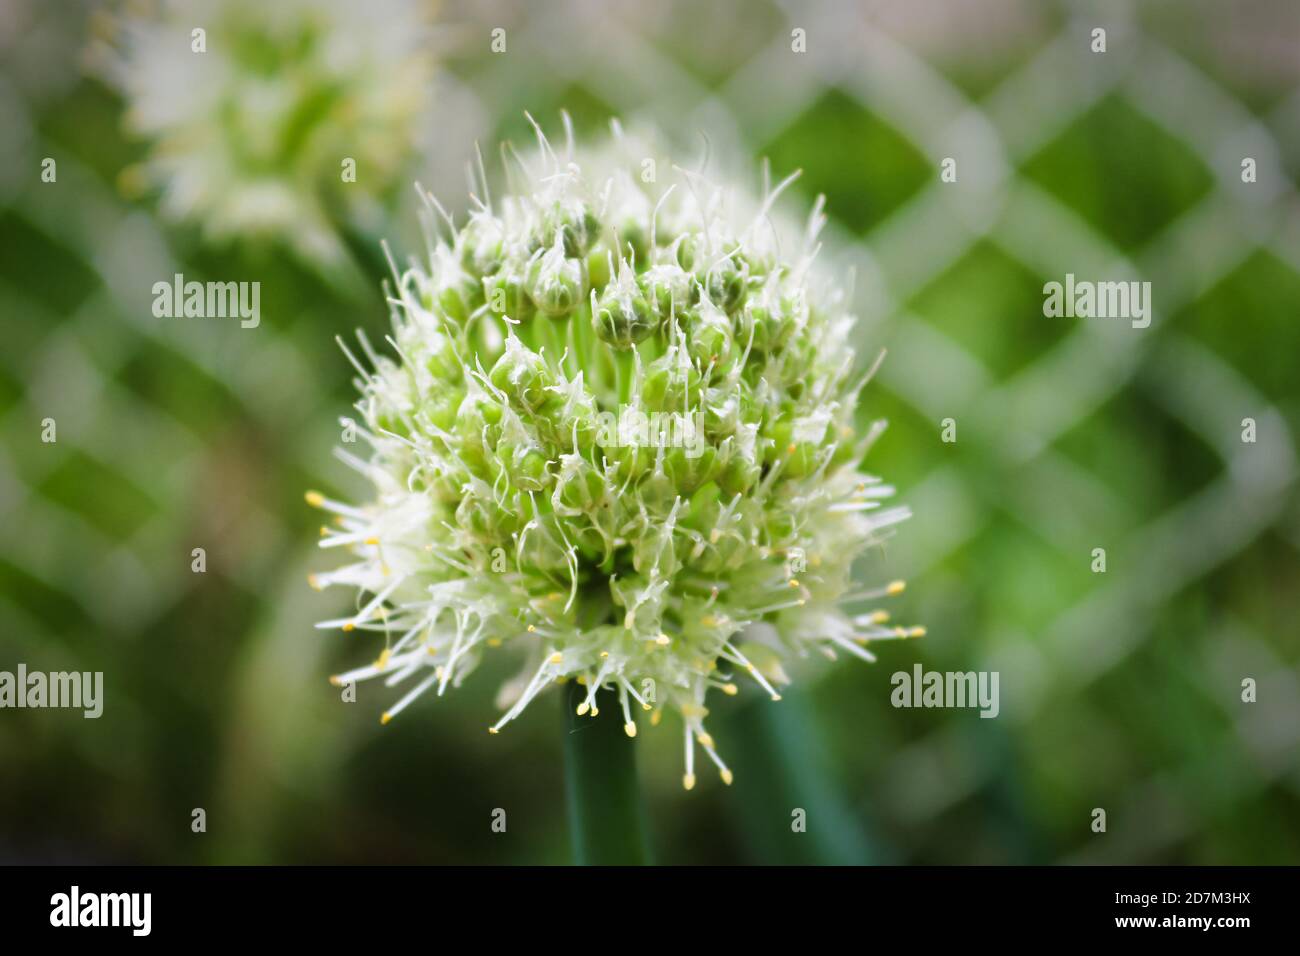 Macro view of an onion umbel flowering Stock Photo